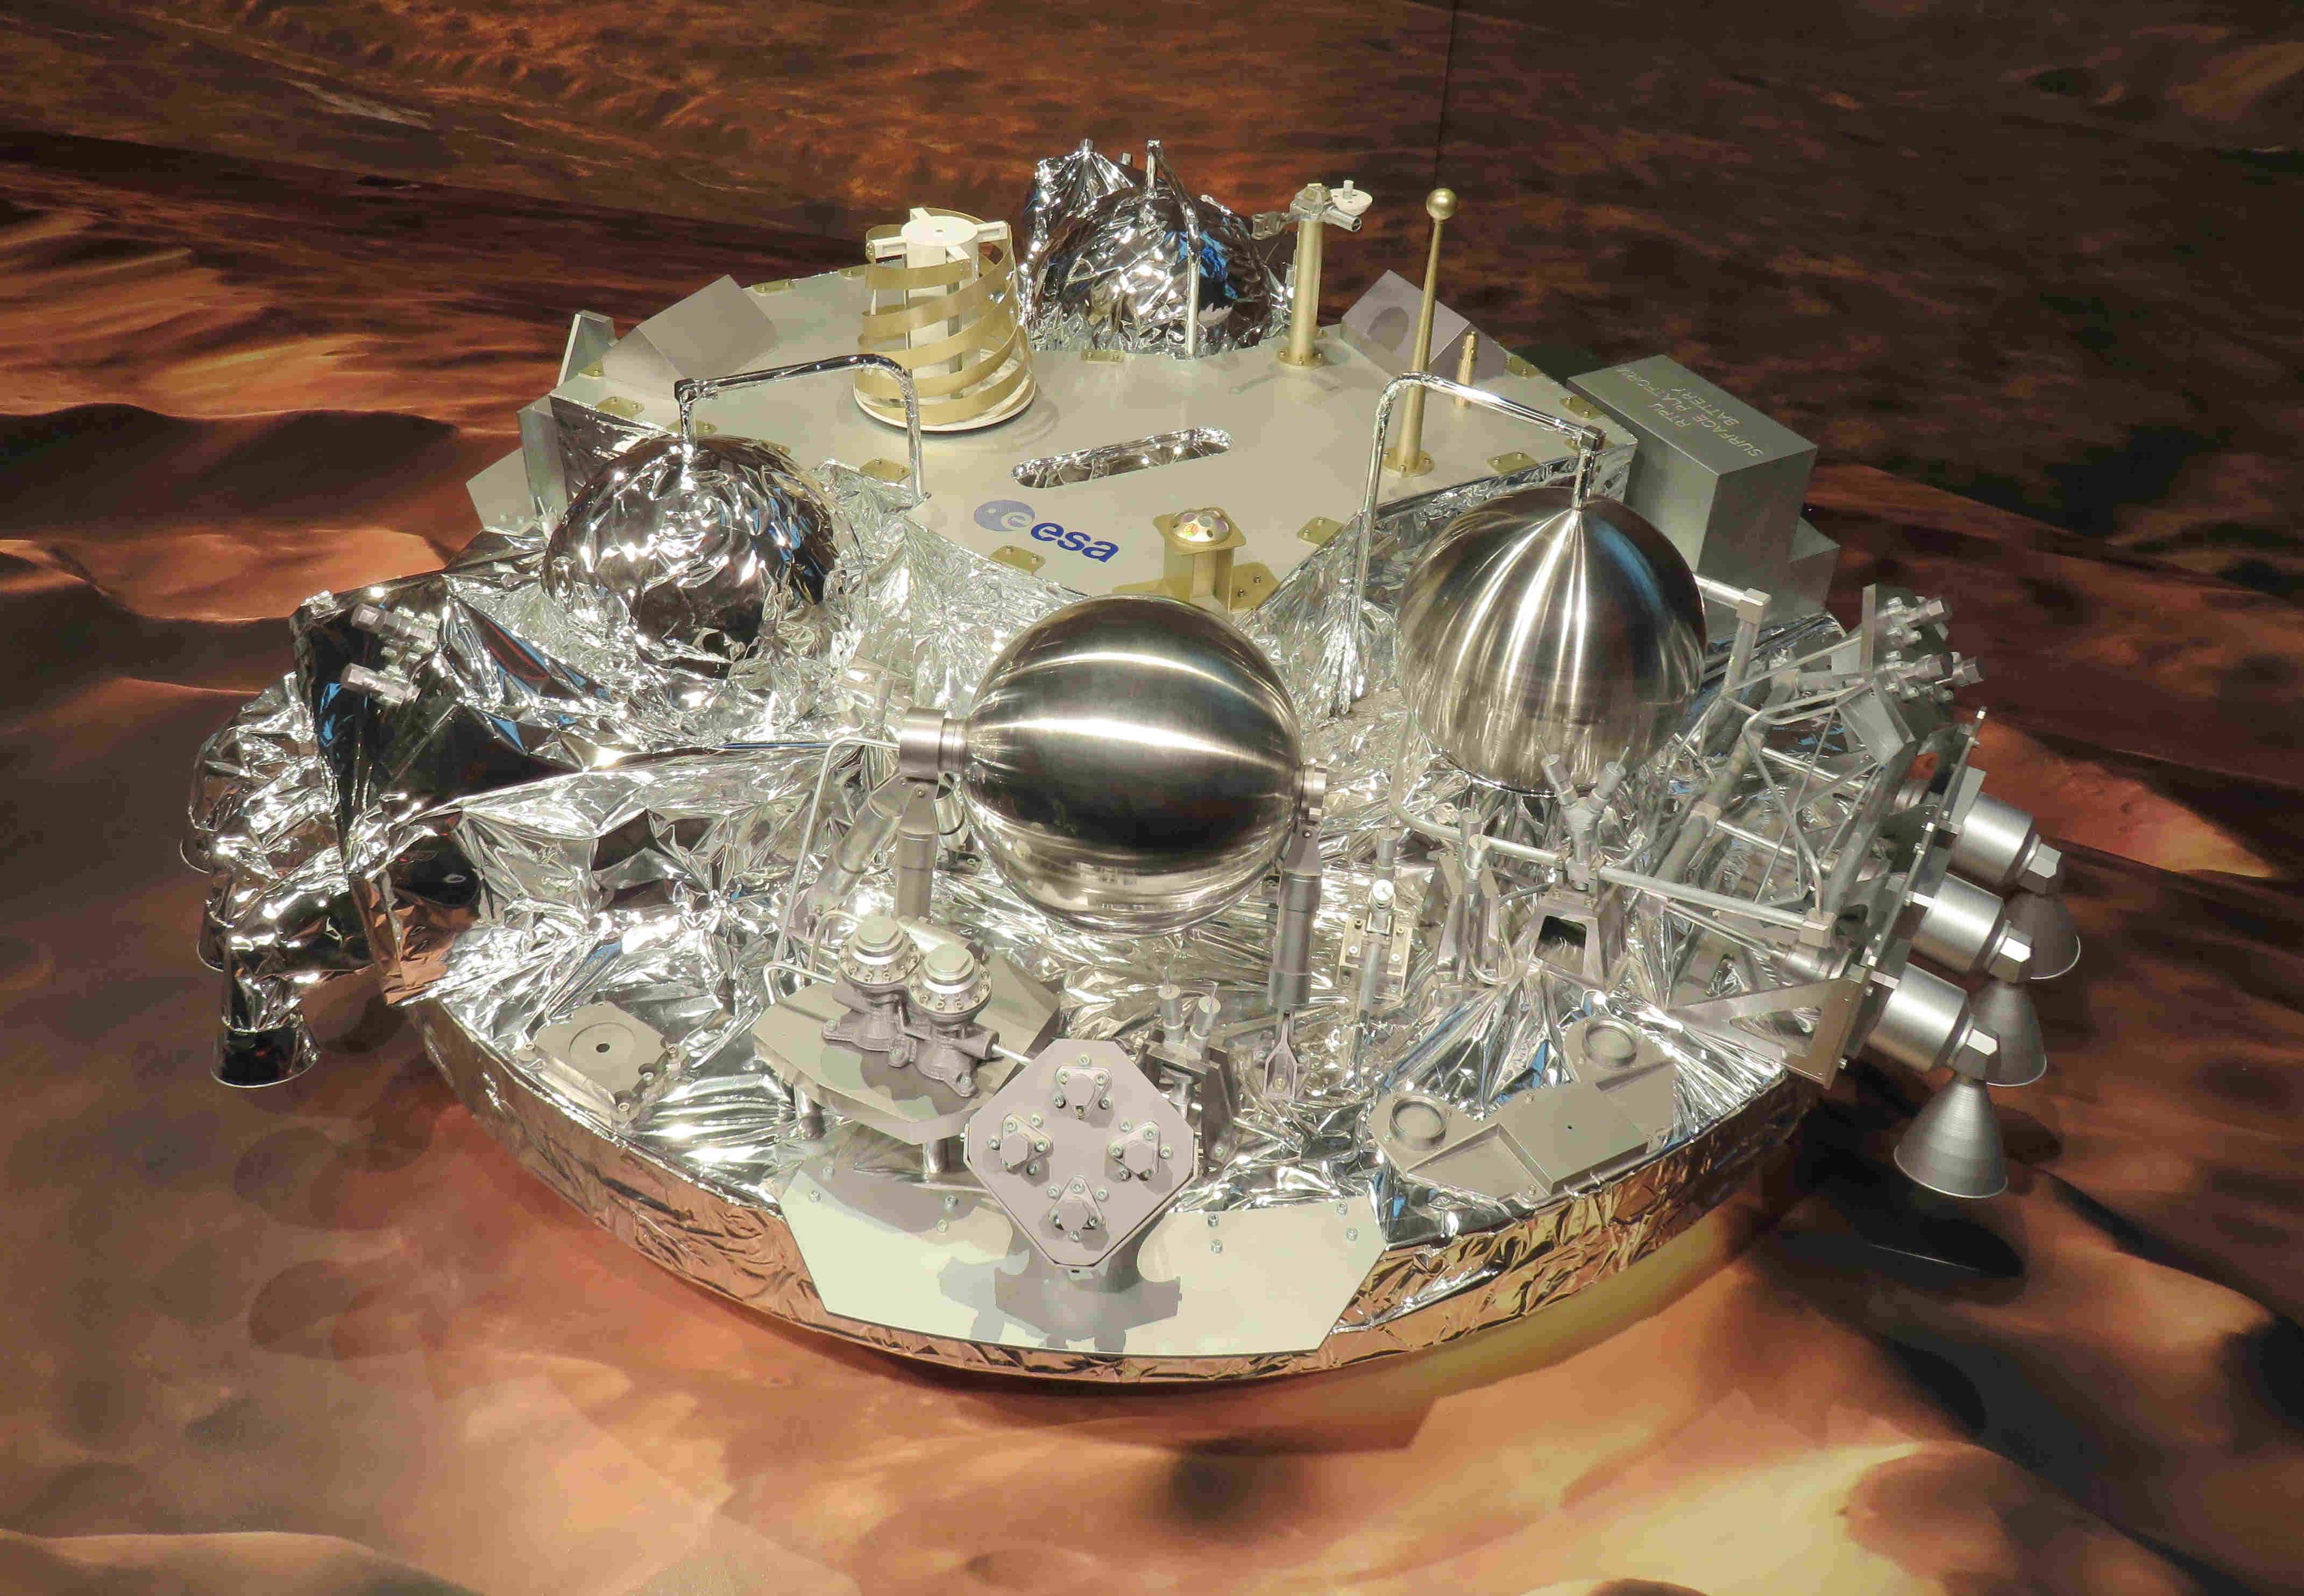 Model of Schiaparelli, lander of ExoMars Trace Gas Orbiter, seen at ESOC in Darmstadt, Germany